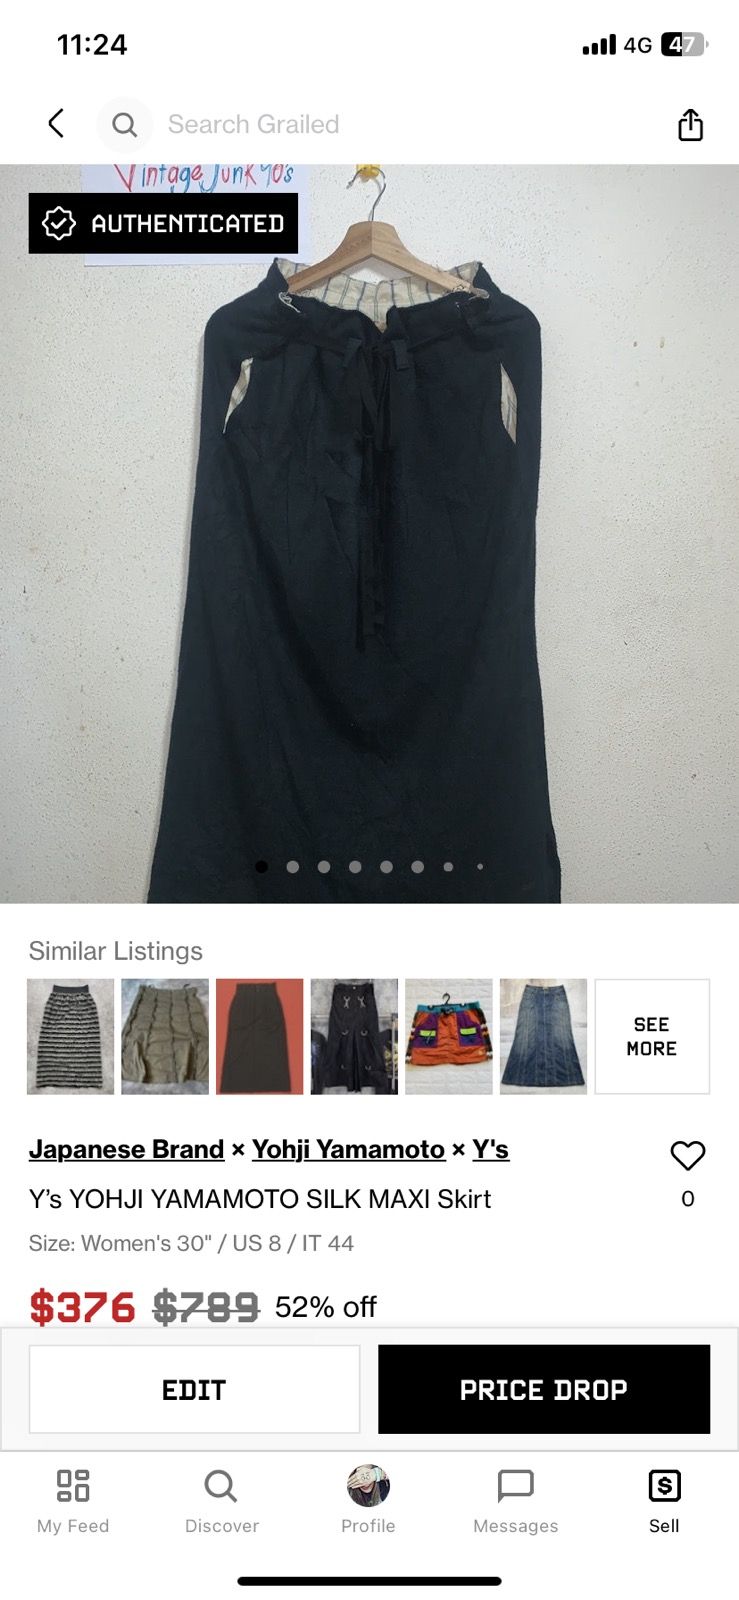 SOIE SILK MAXI Skirt Y’s By Yohji Yamamoto - 19